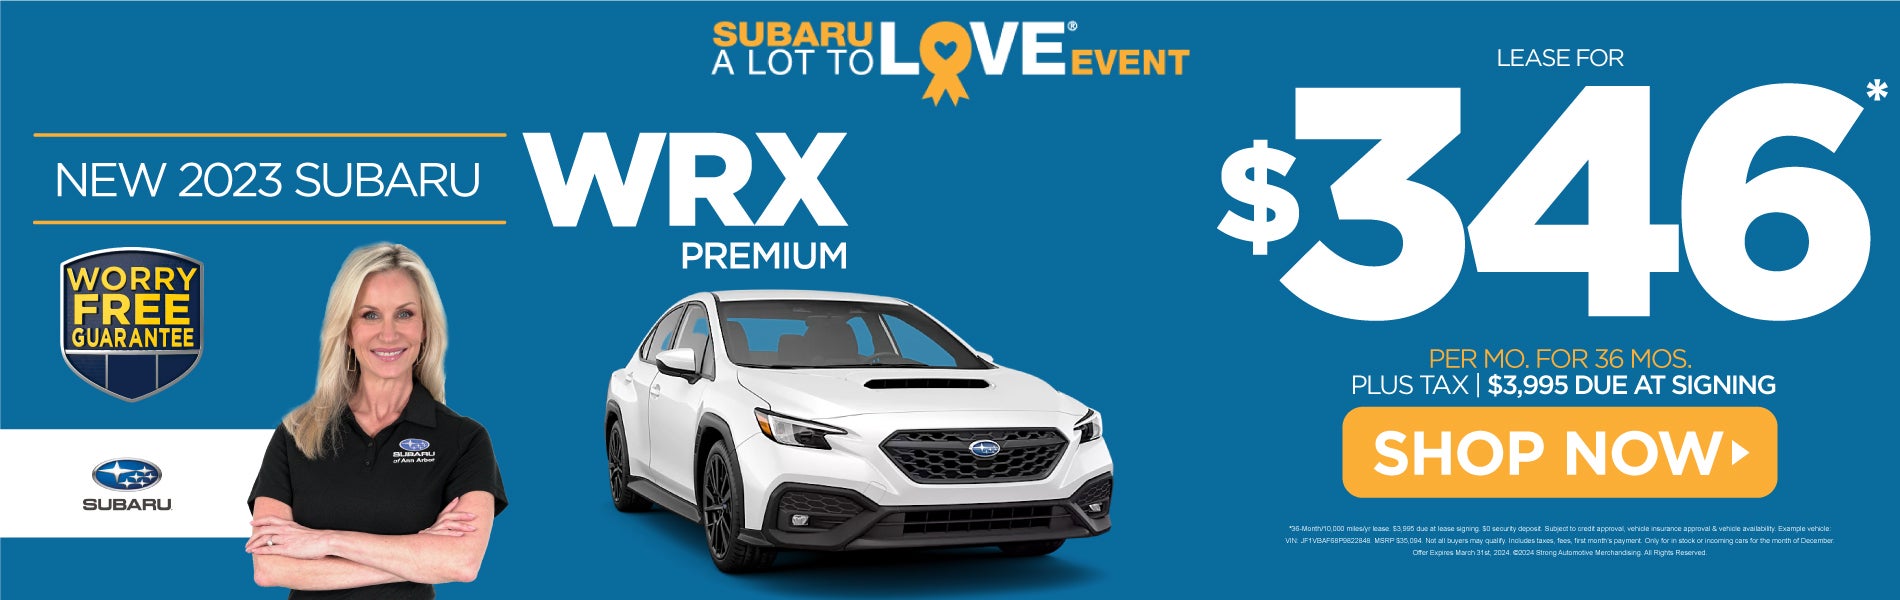 New 2023 Subaru WRX Premium - $346*/mo. - Shop Now